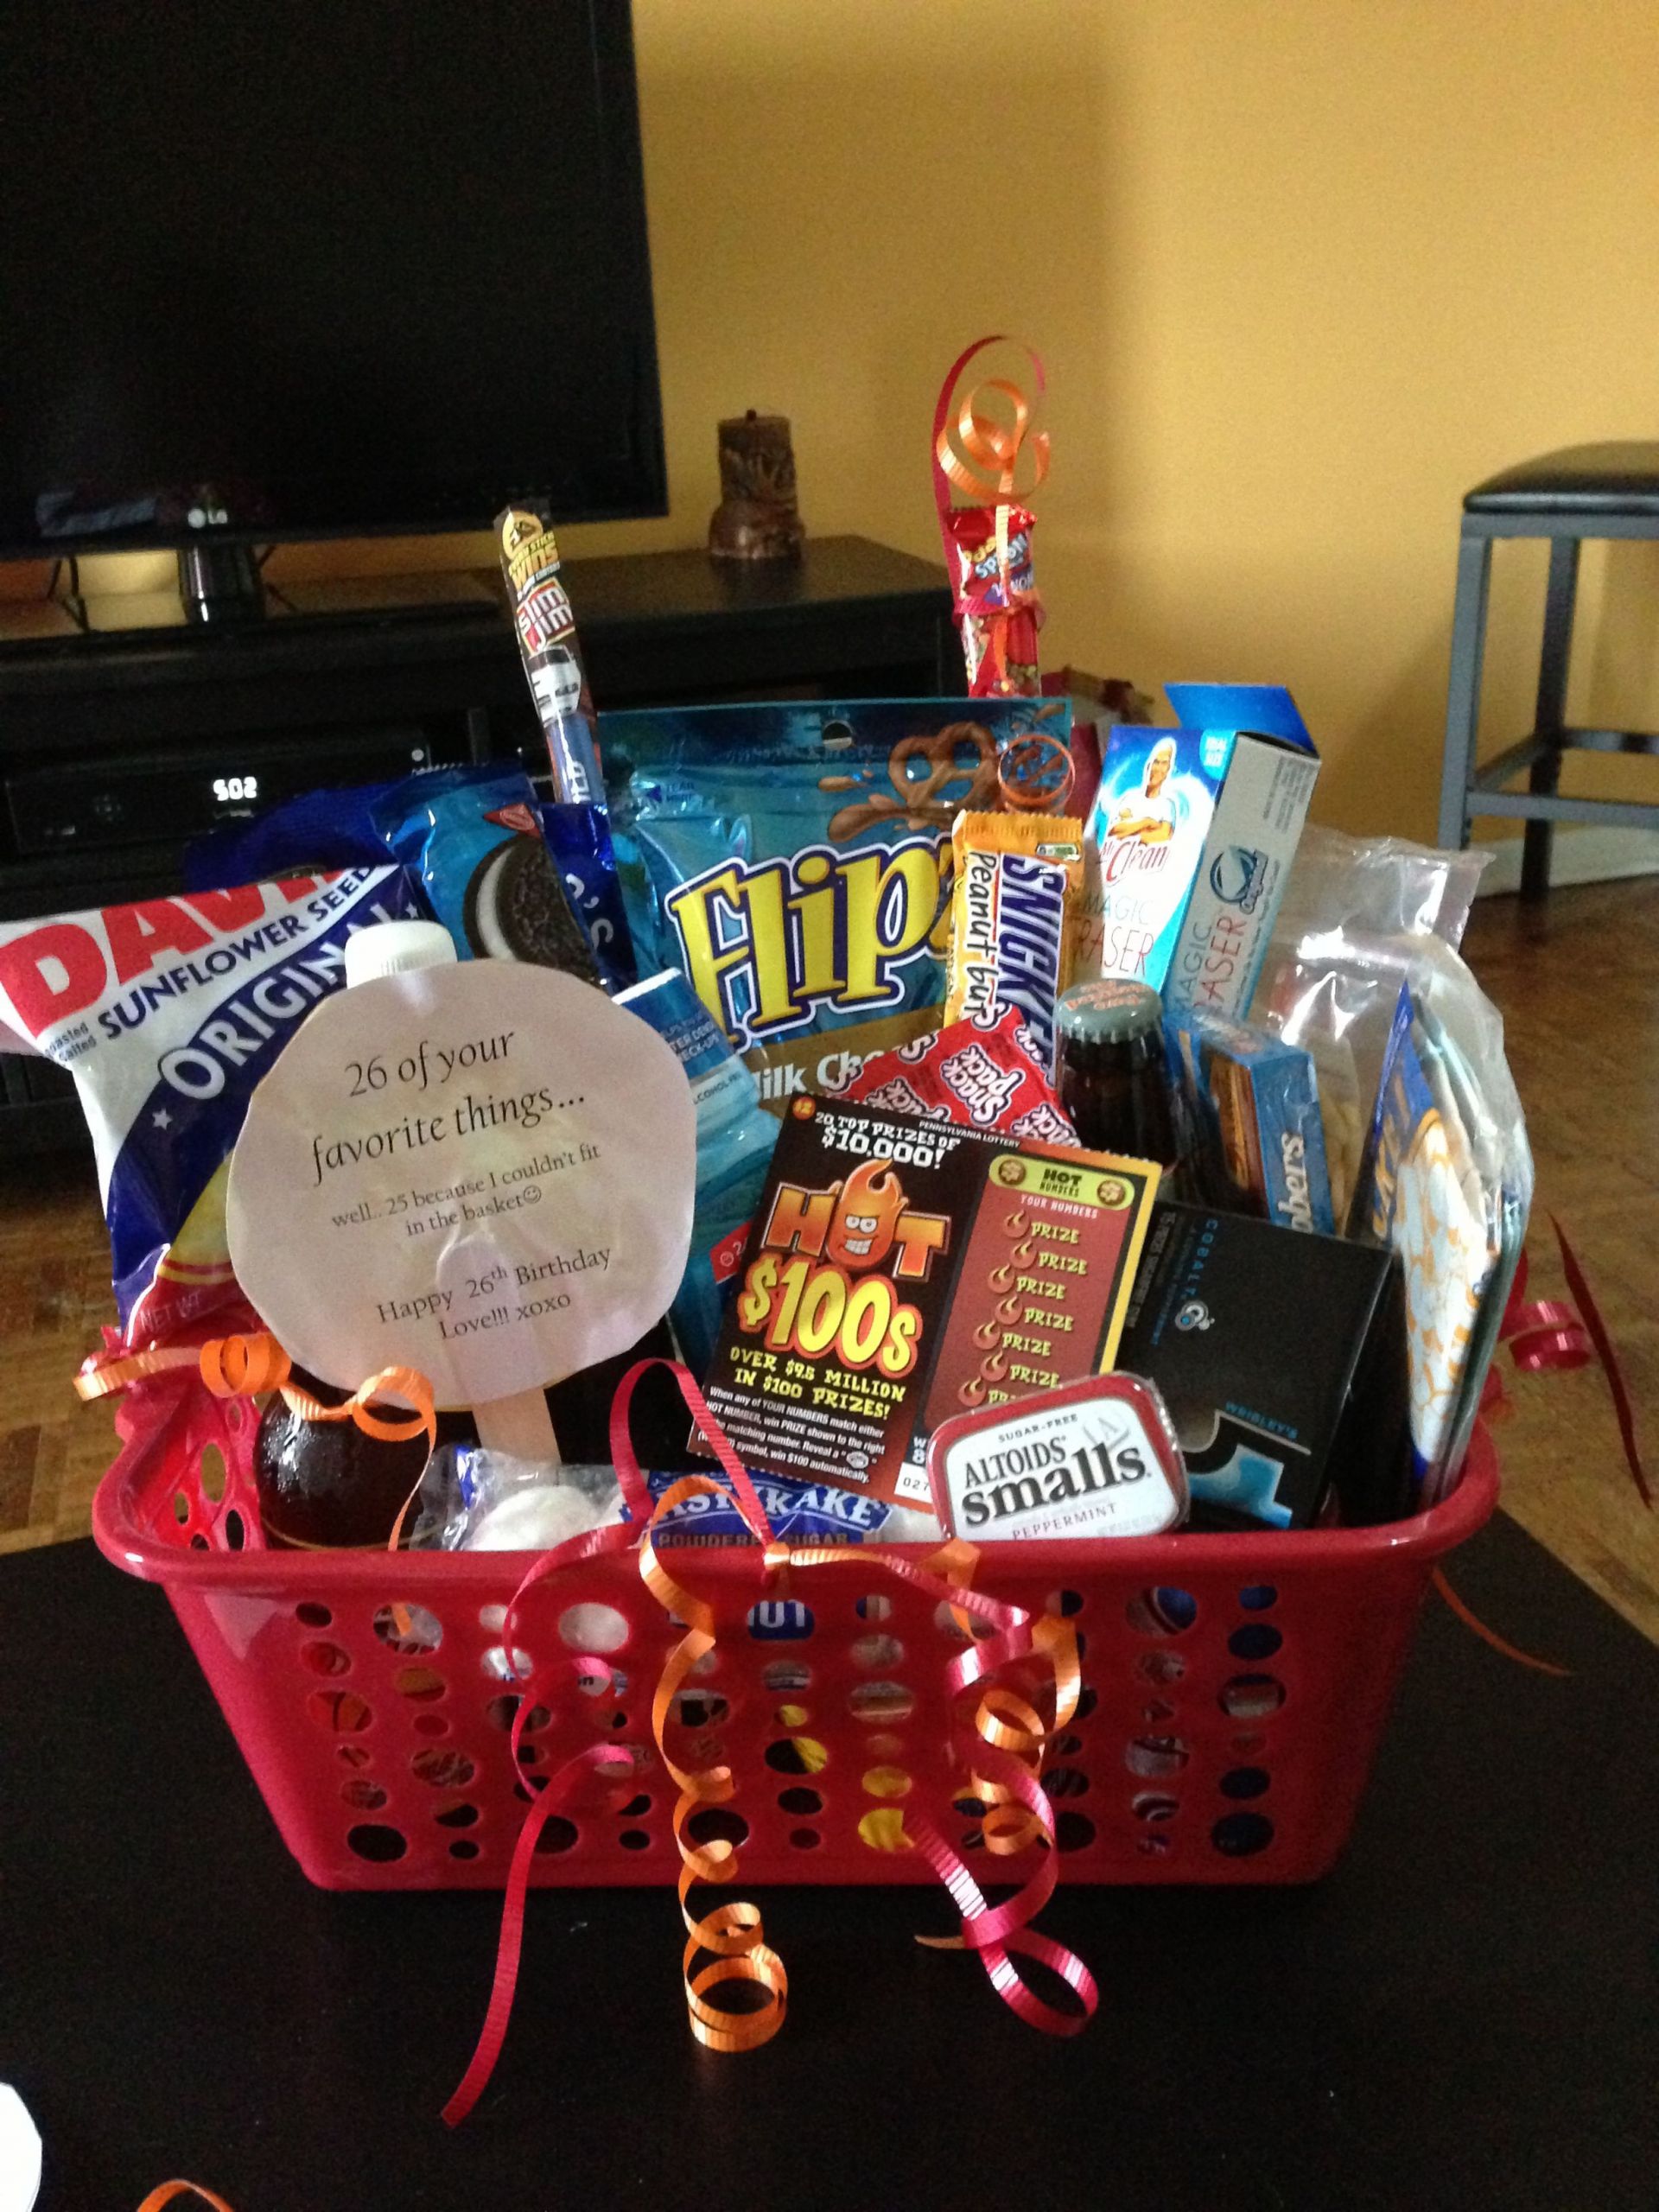 Birthday Gift Ideas For A Boyfriend
 Boyfriend birthday basket 26 of his favorite things for